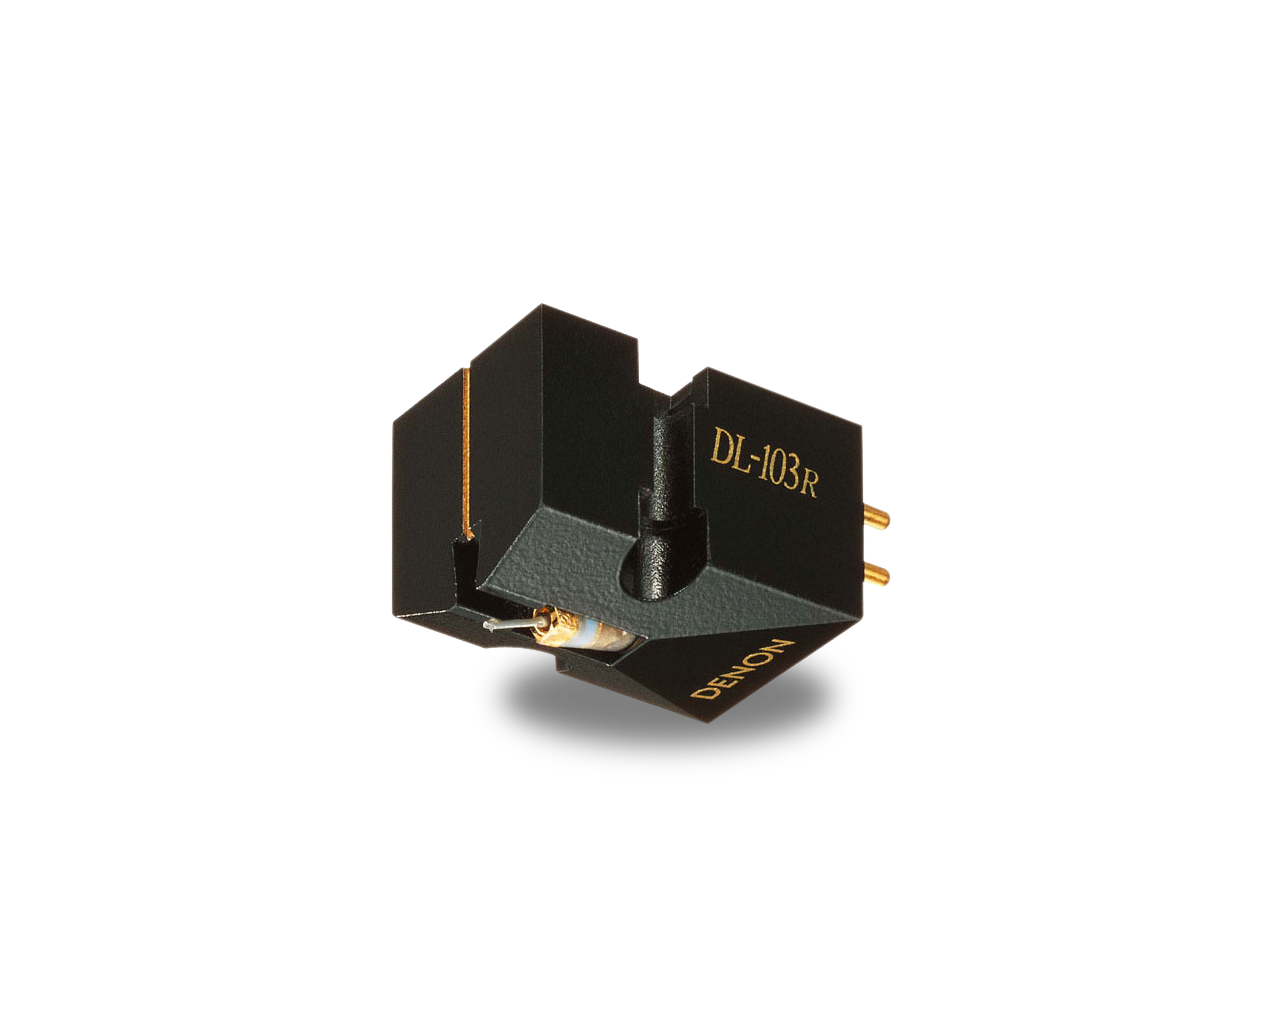 Denon DL-103R MC sound box